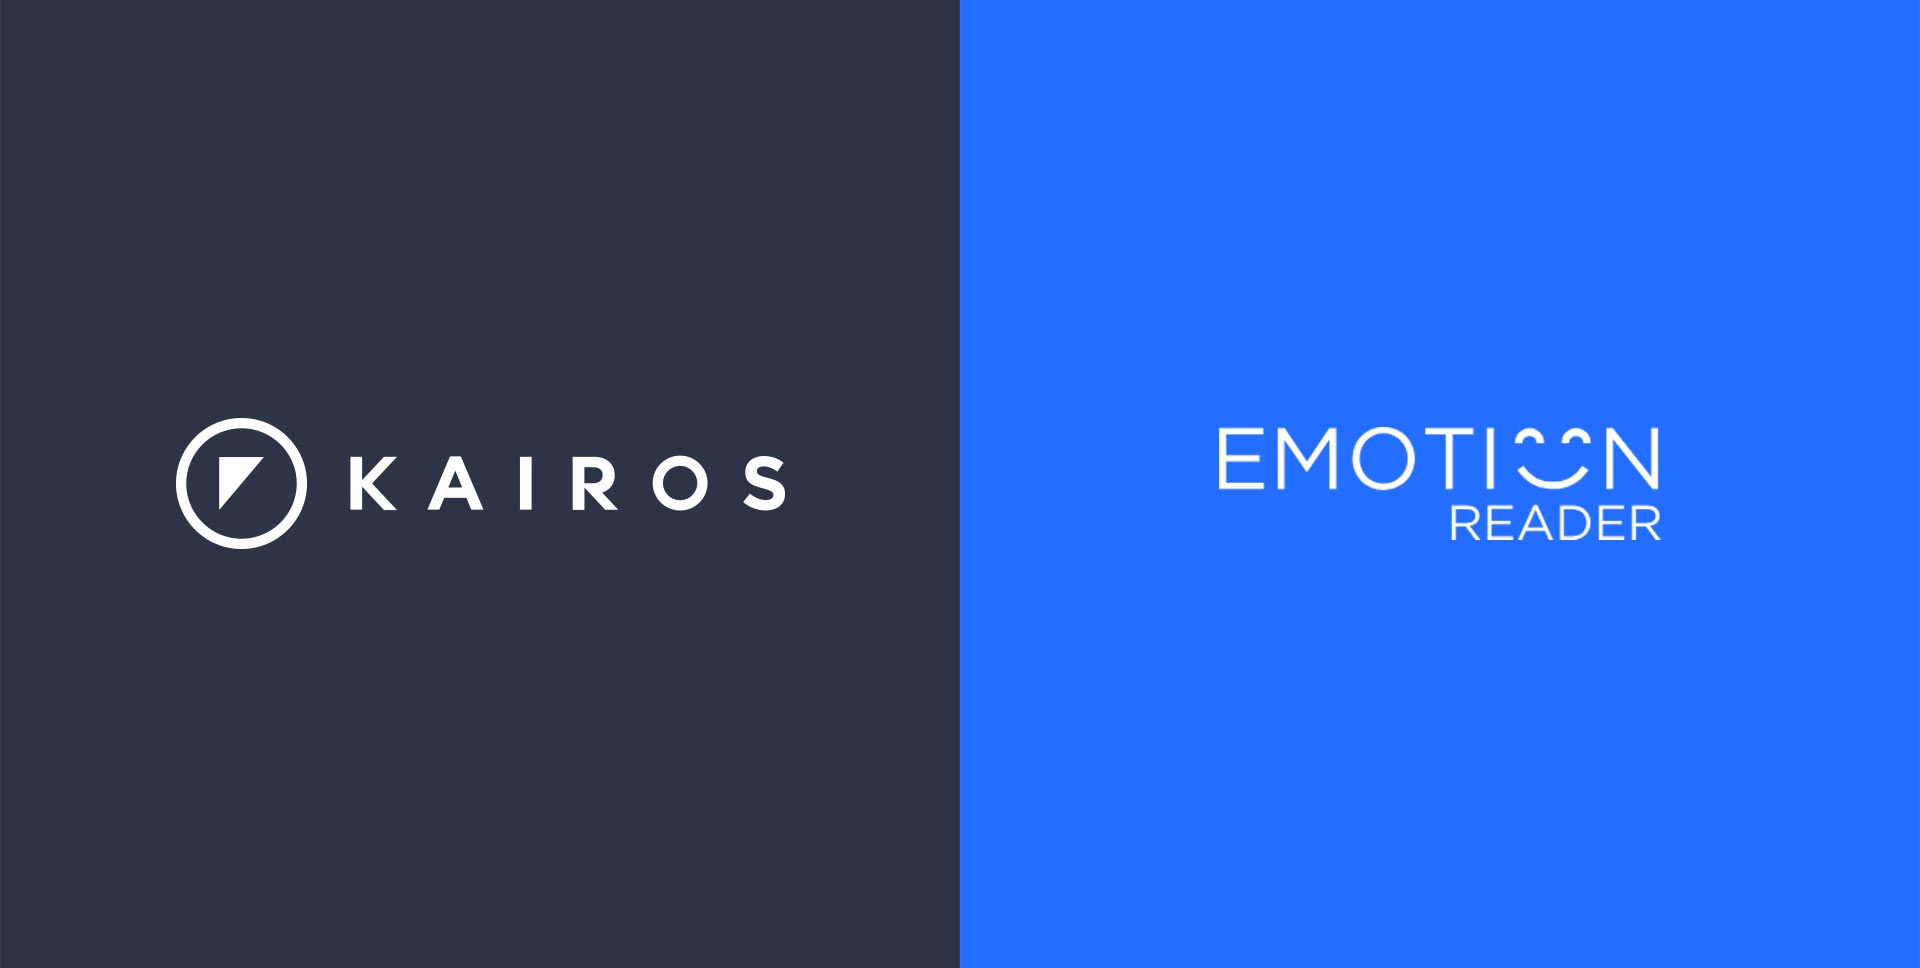 Kairos and EmotionReader logos